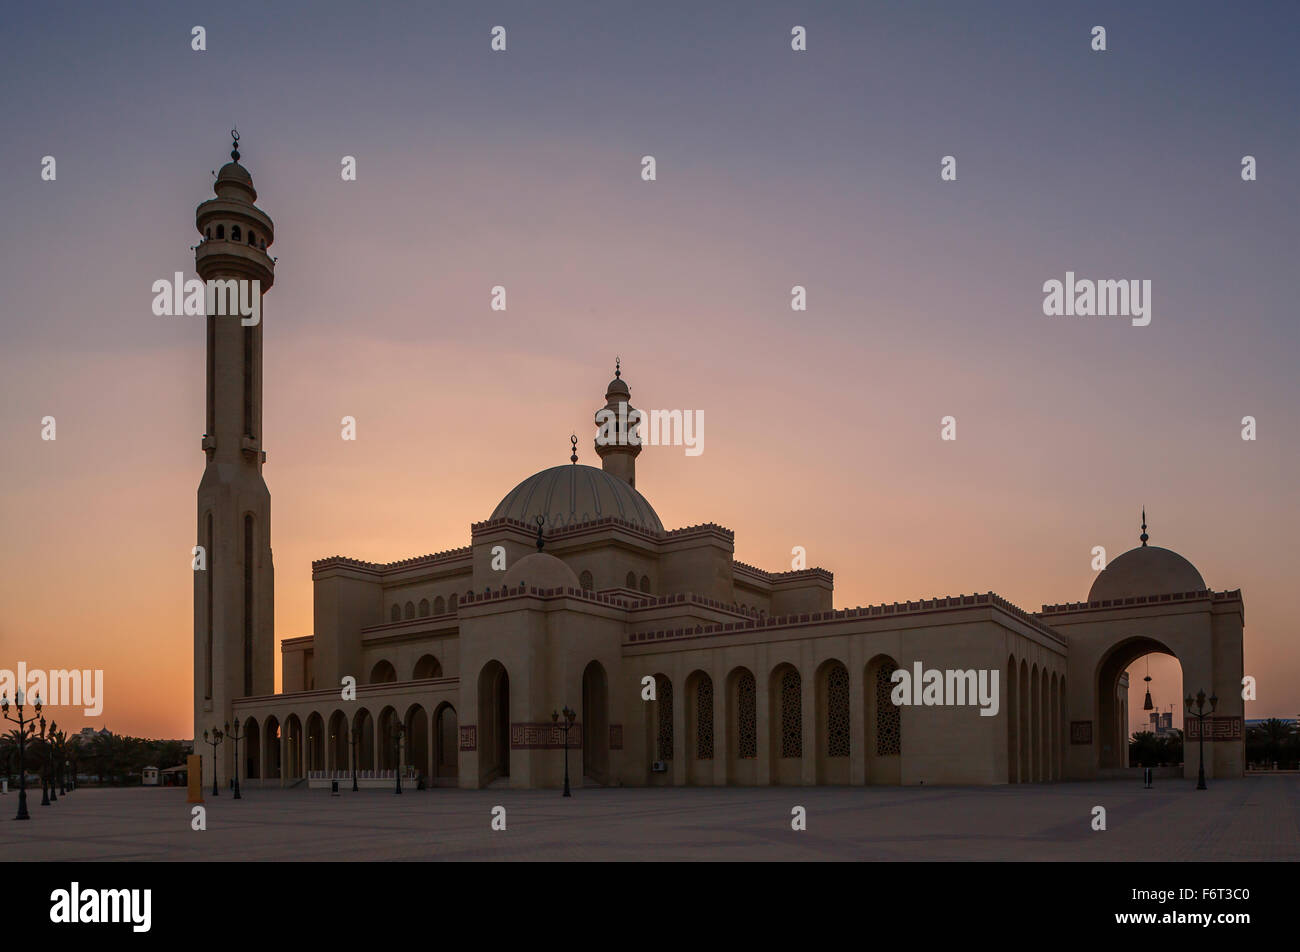 Moschee und Turm unter Sonnenuntergang Himmel, Manama, Bahrain Stockfoto